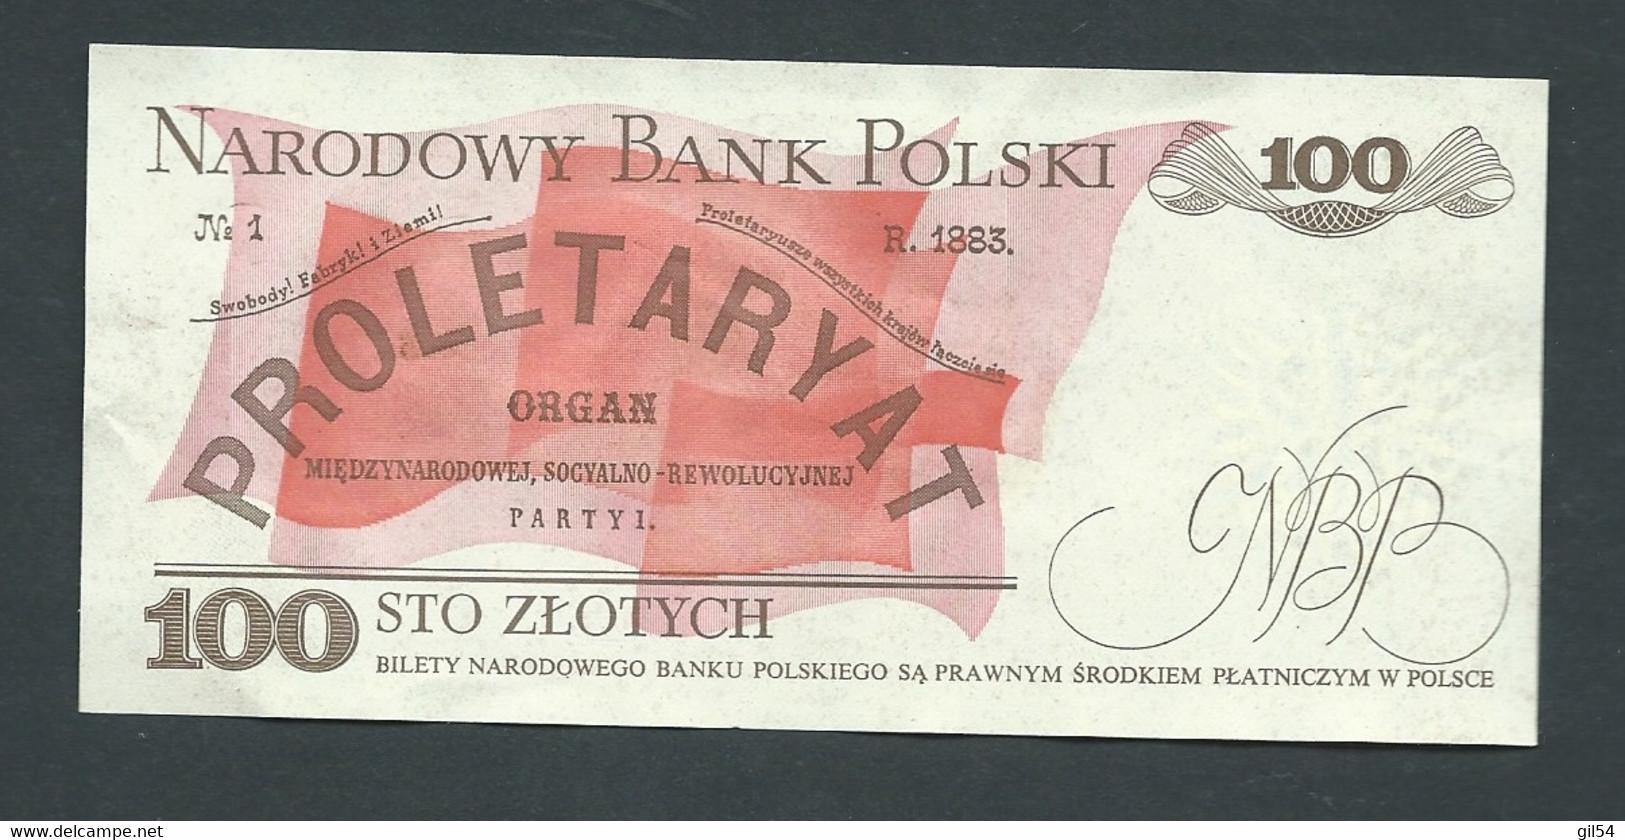 Billet, Pologne, 100 Zlotych, 1975-1988, 1988-12-01, TT0999653, Pelurage , Laura 7001 - Pologne